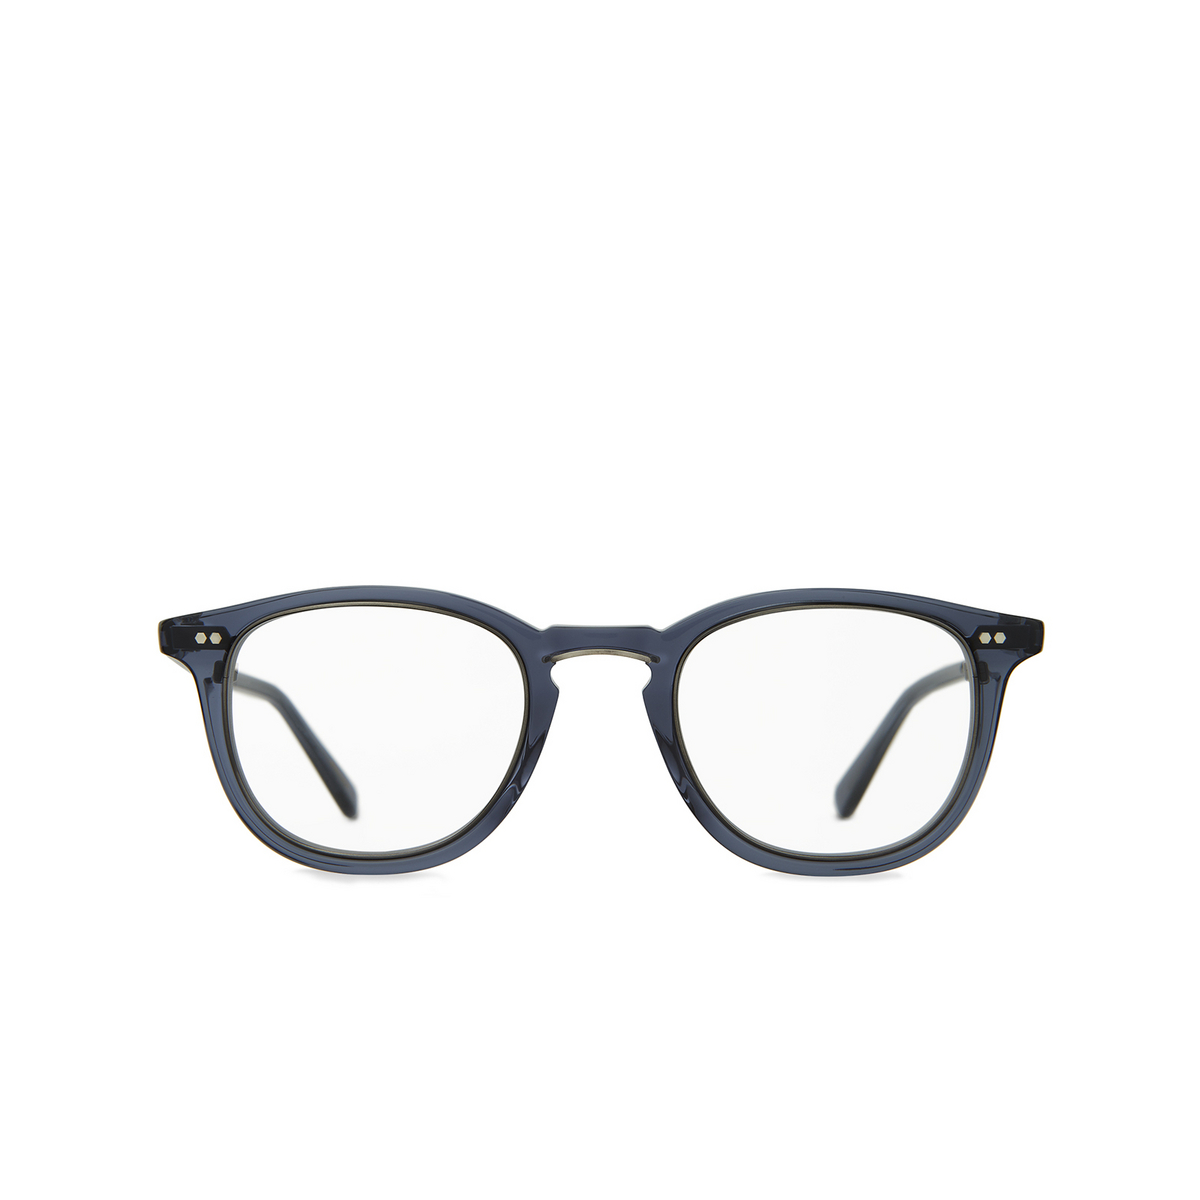 Mr. Leight COOPERS C Eyeglasses MID-ANTPLT Midnight - Antique Platinum - front view